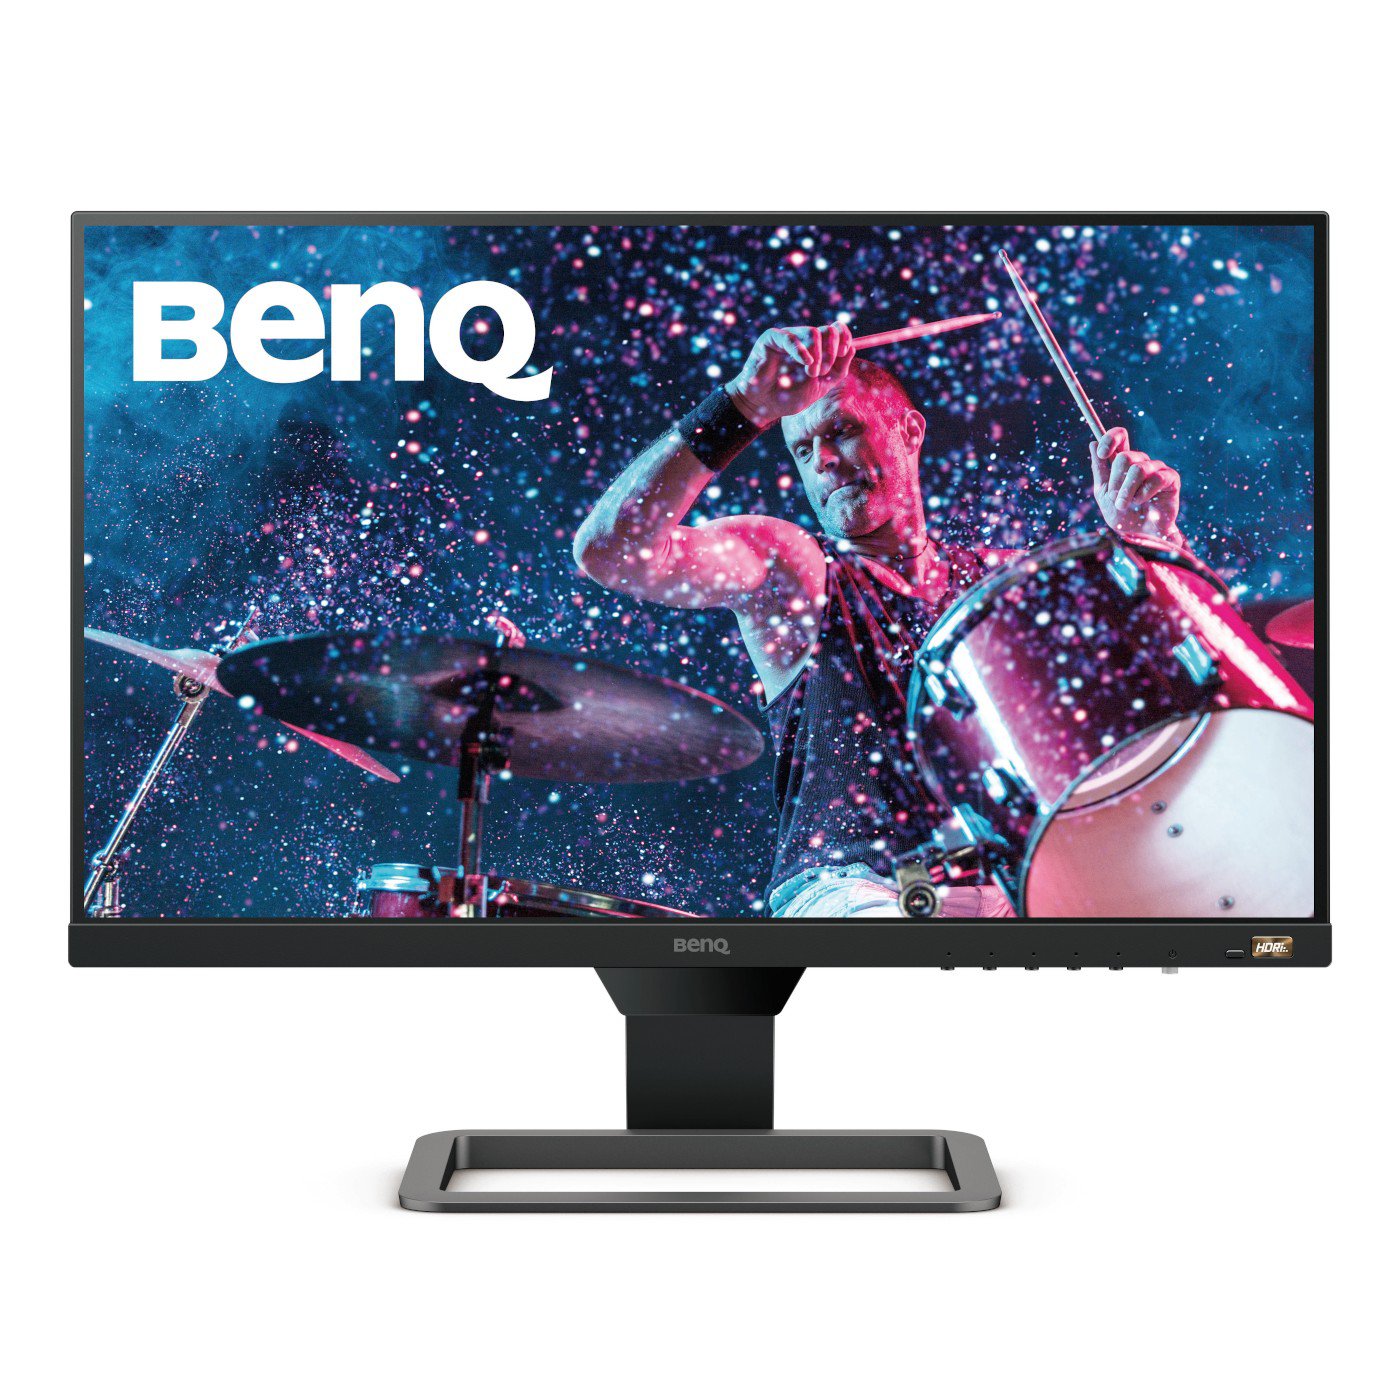 Speaker Smashed HDR BenQ BENQ 24 Inches Enjoyment Monitor with HDRi Full HD 1080p 